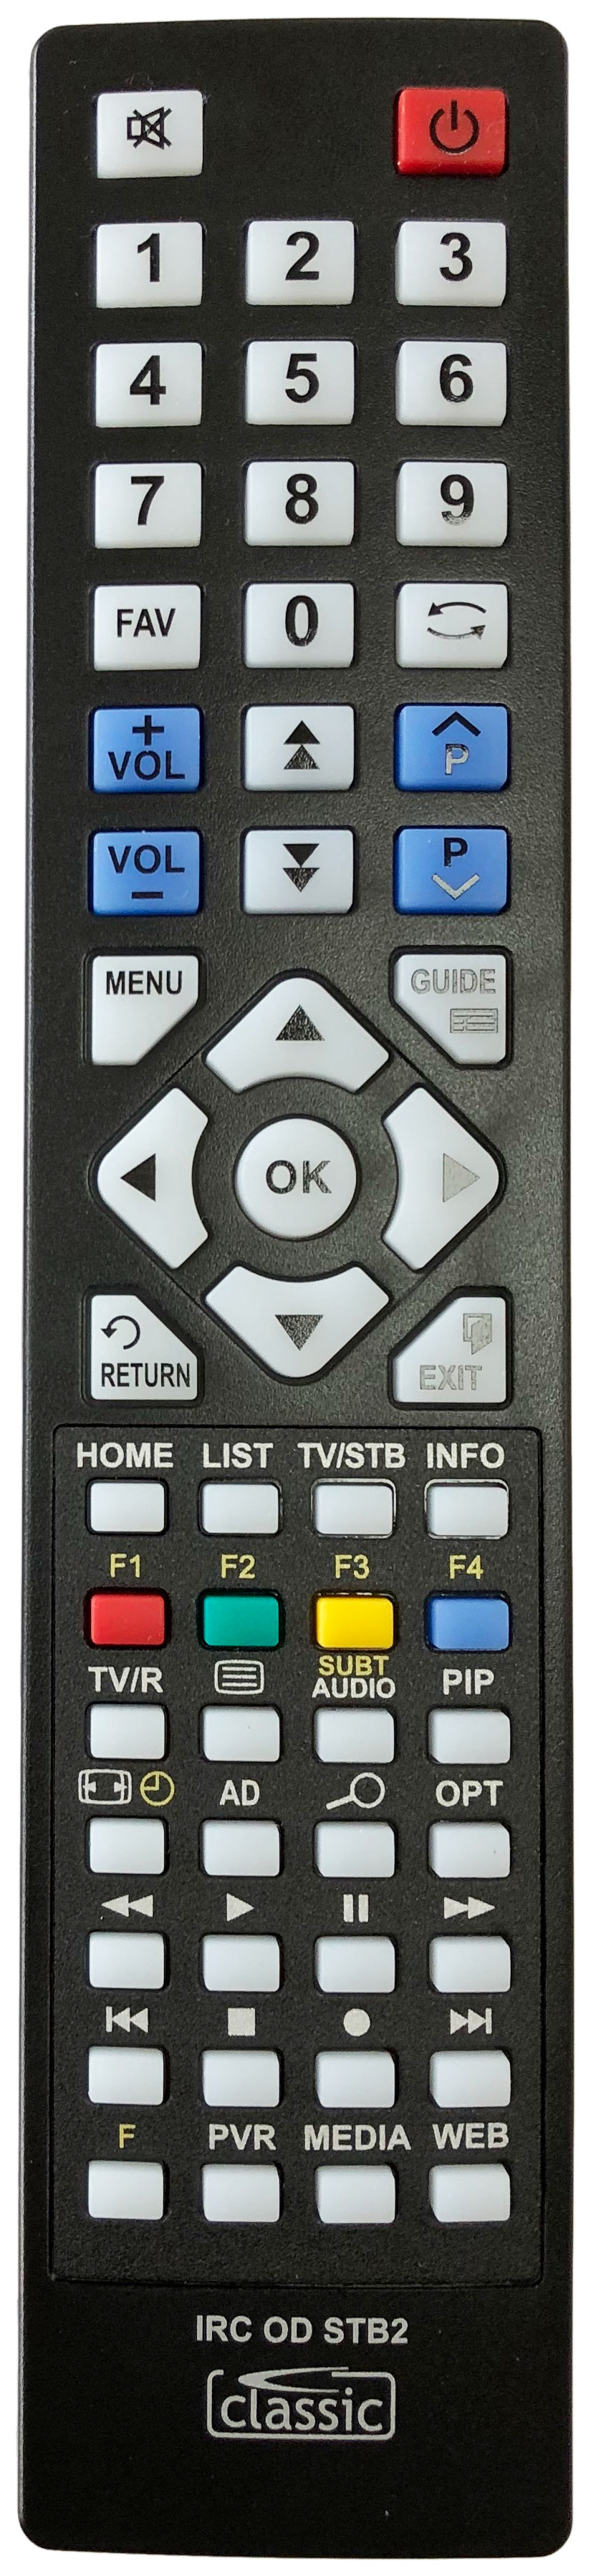 HUMAX RM-I09U Remote Control Alternative